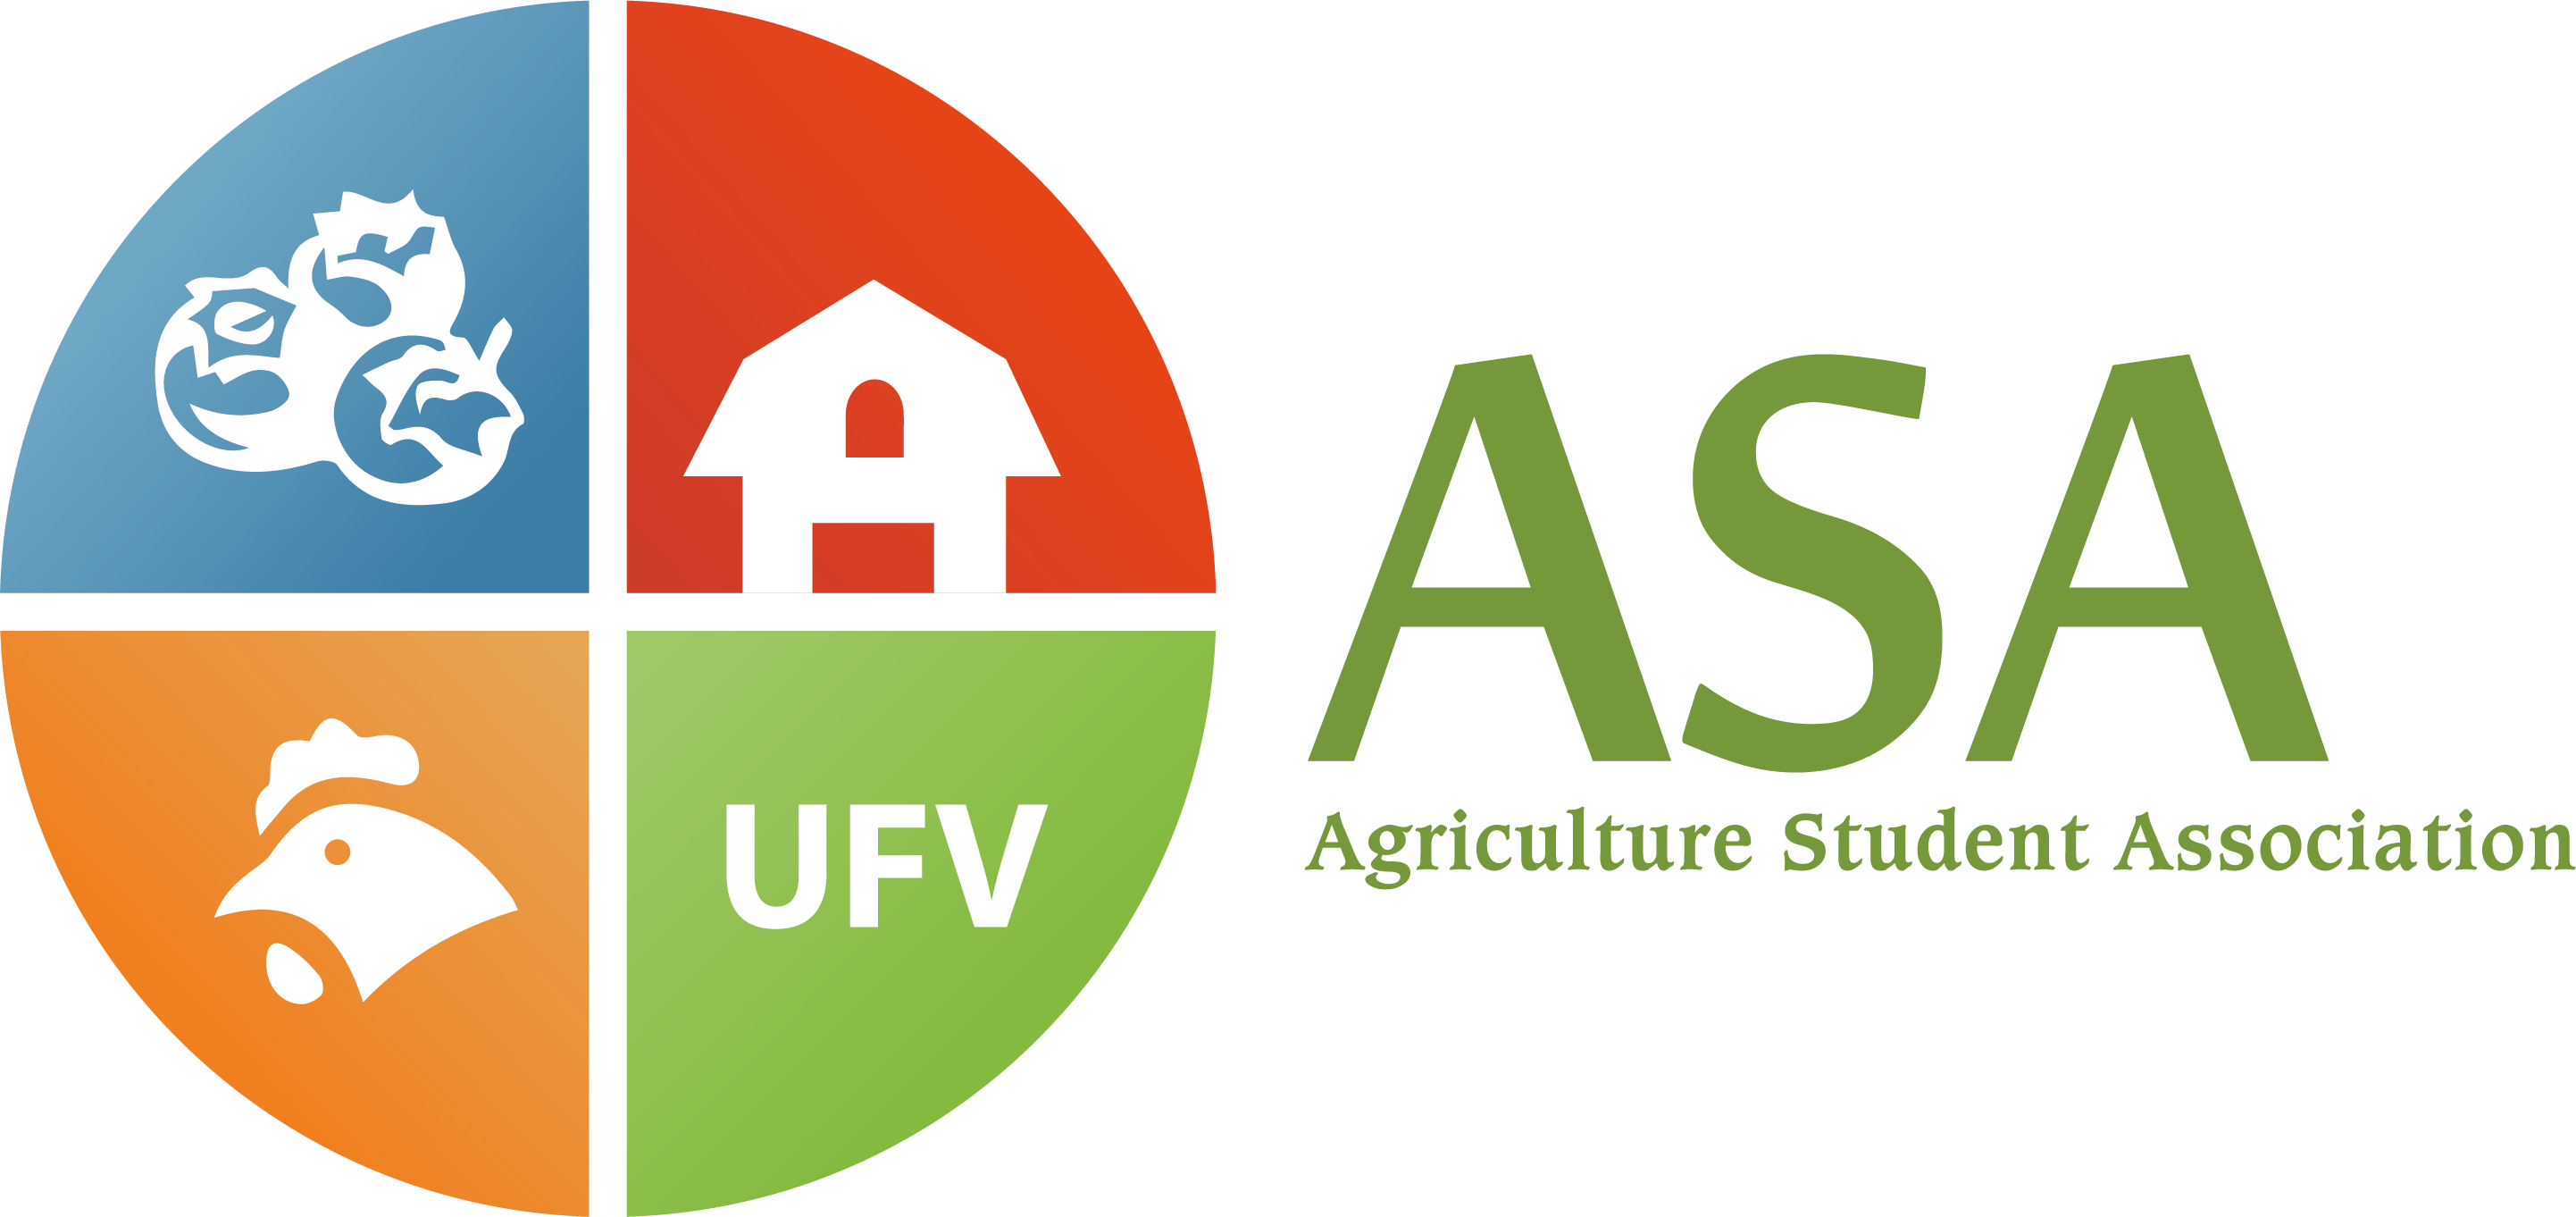 UFV Agriculture Student Association